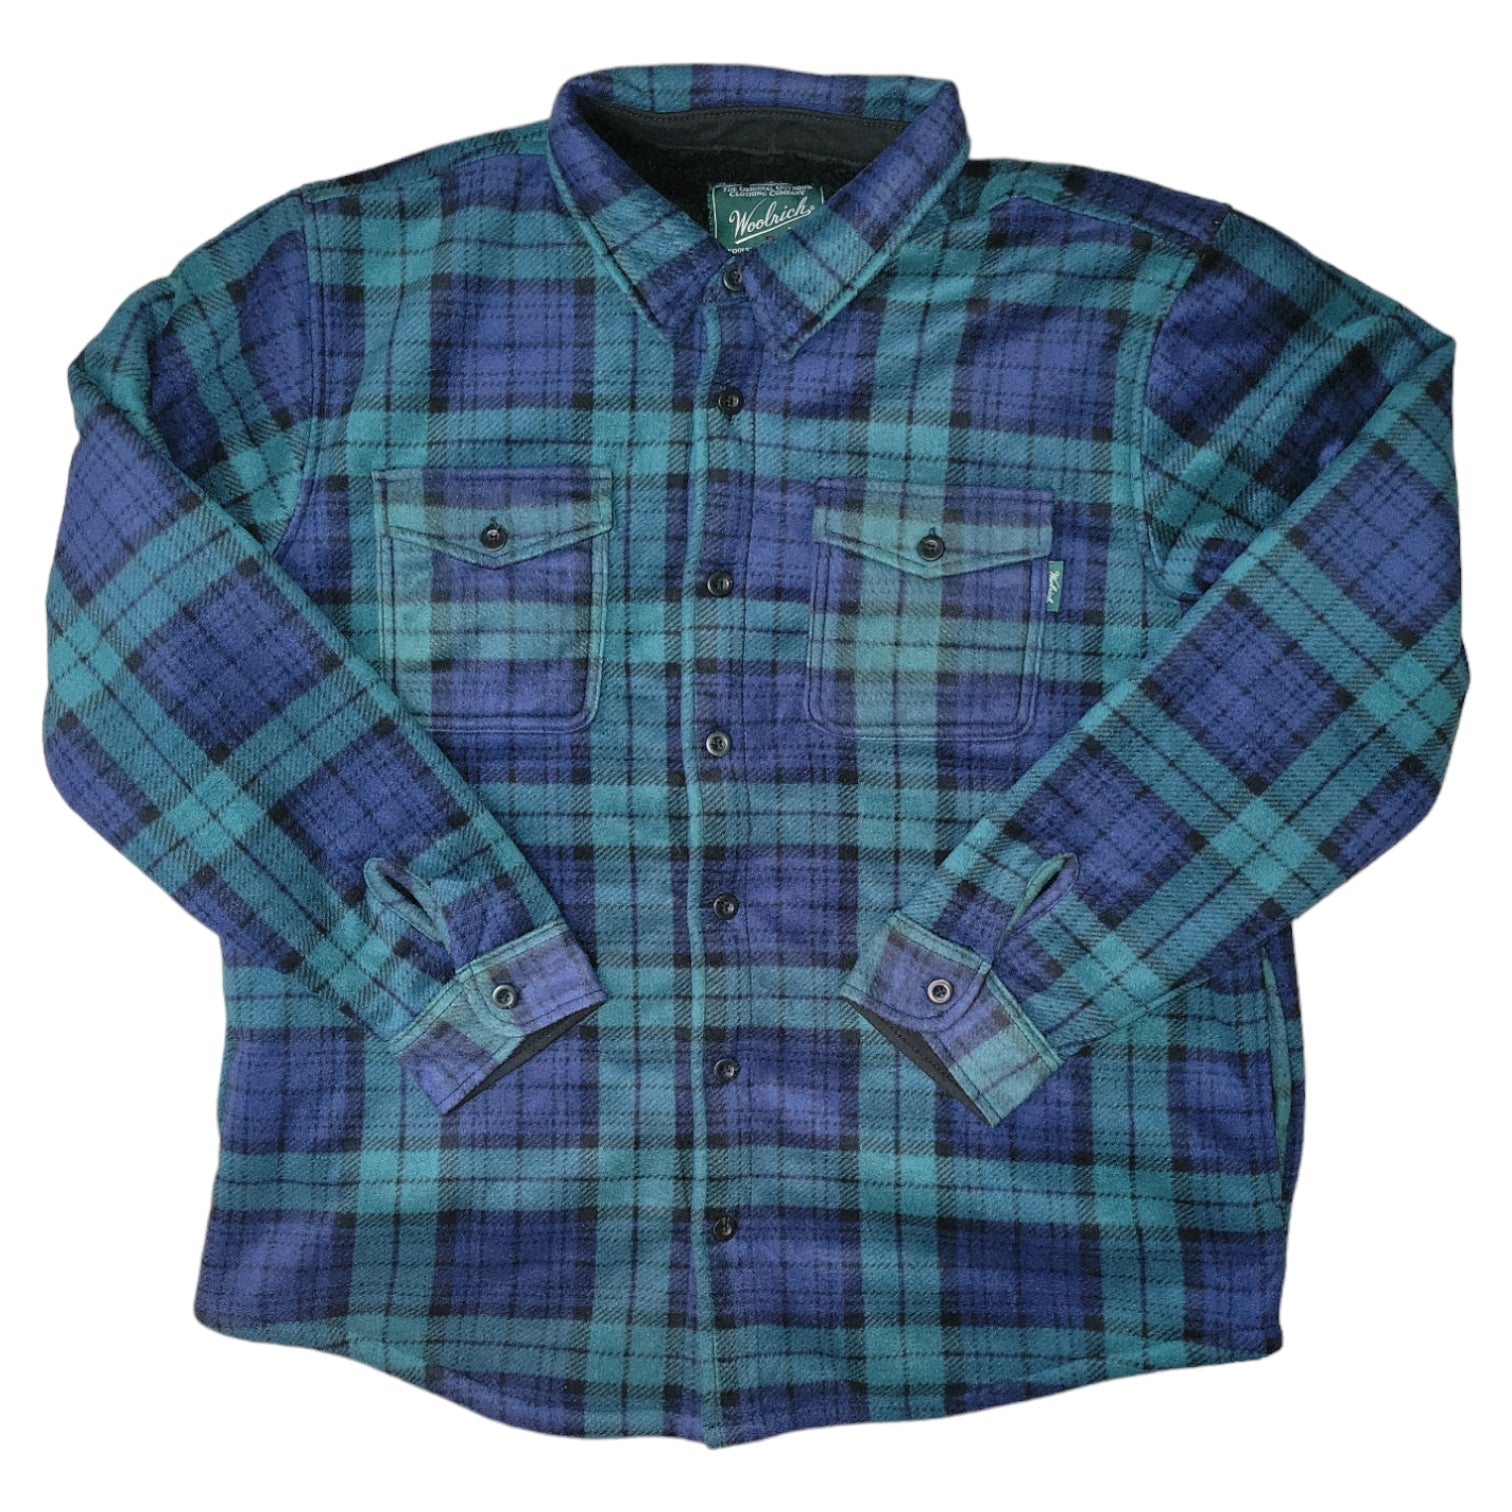 Woolrich Flannel Extra Warm Button Fleece Lined Shirt Jacket